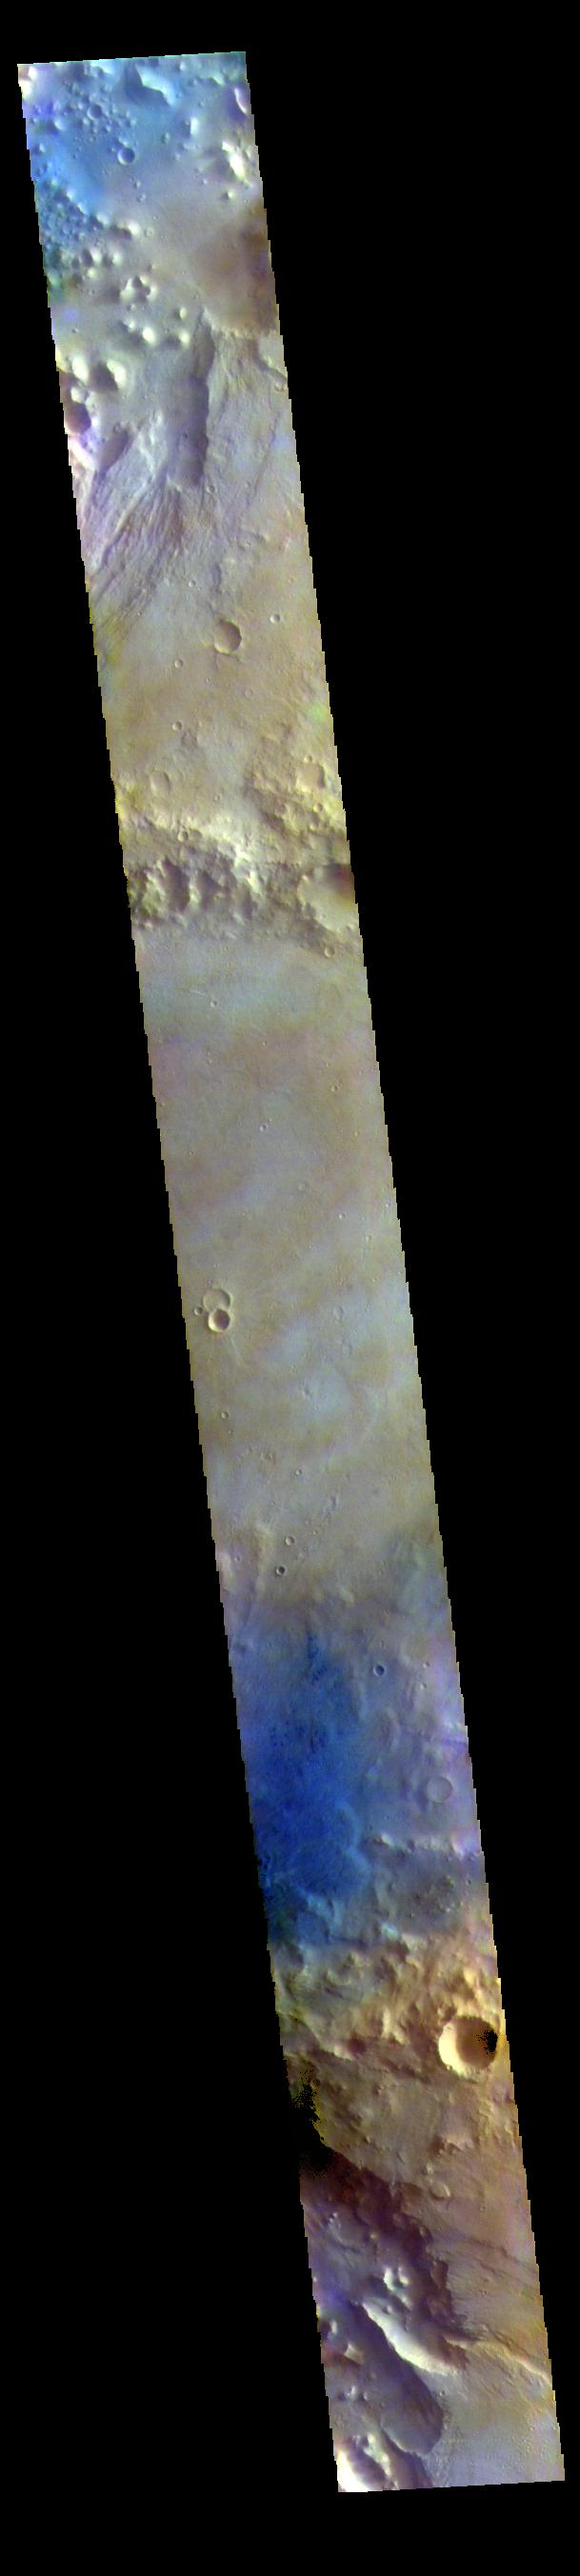 PIA25102: Chia Crater - False Color